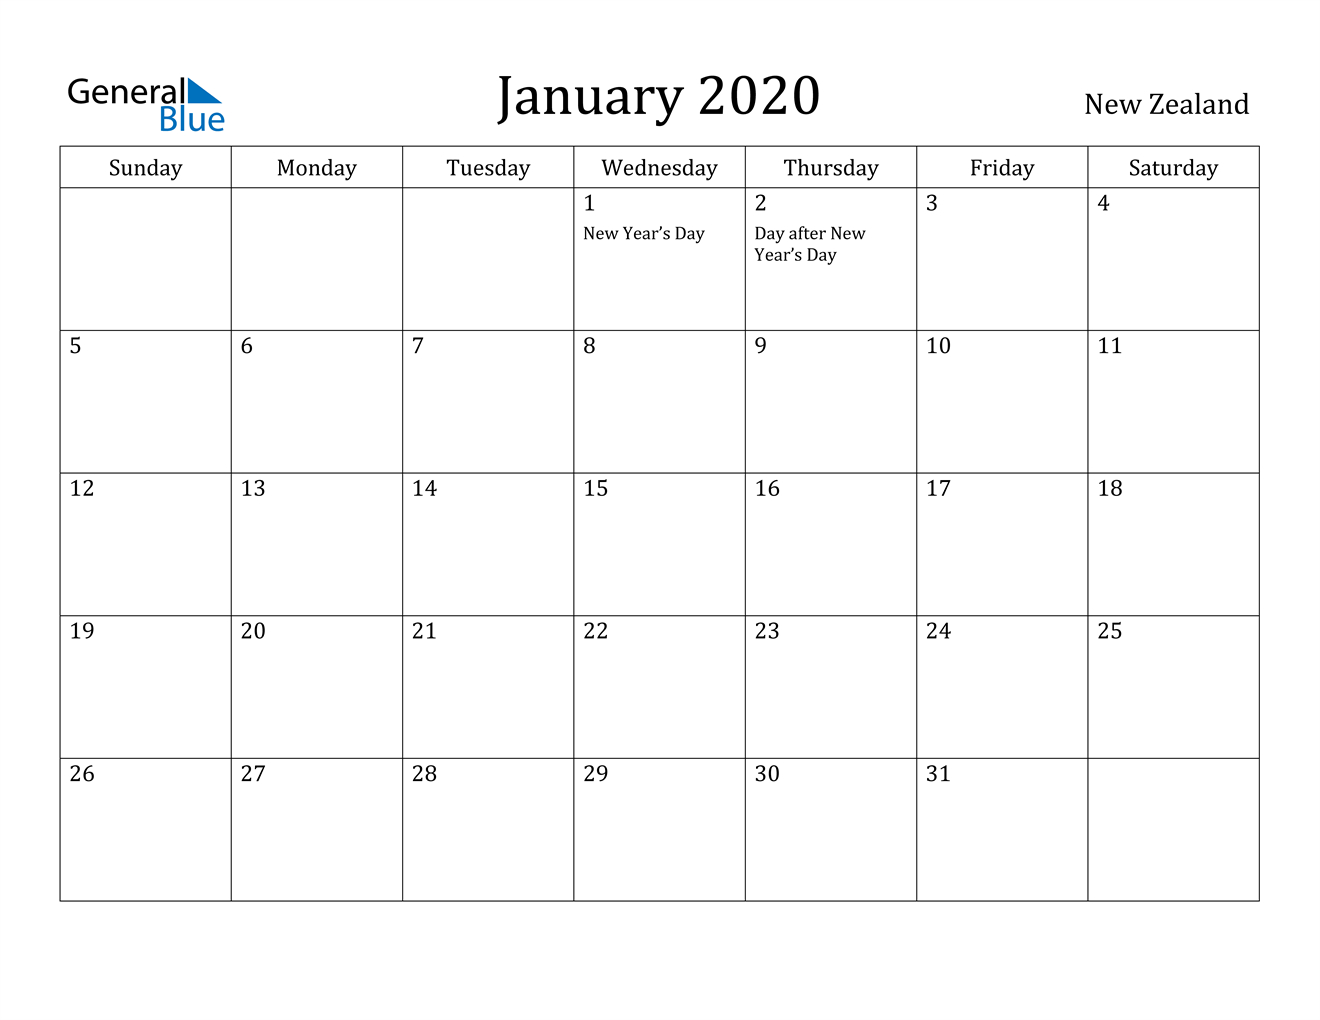 January 2020 Calendar - New Zealand